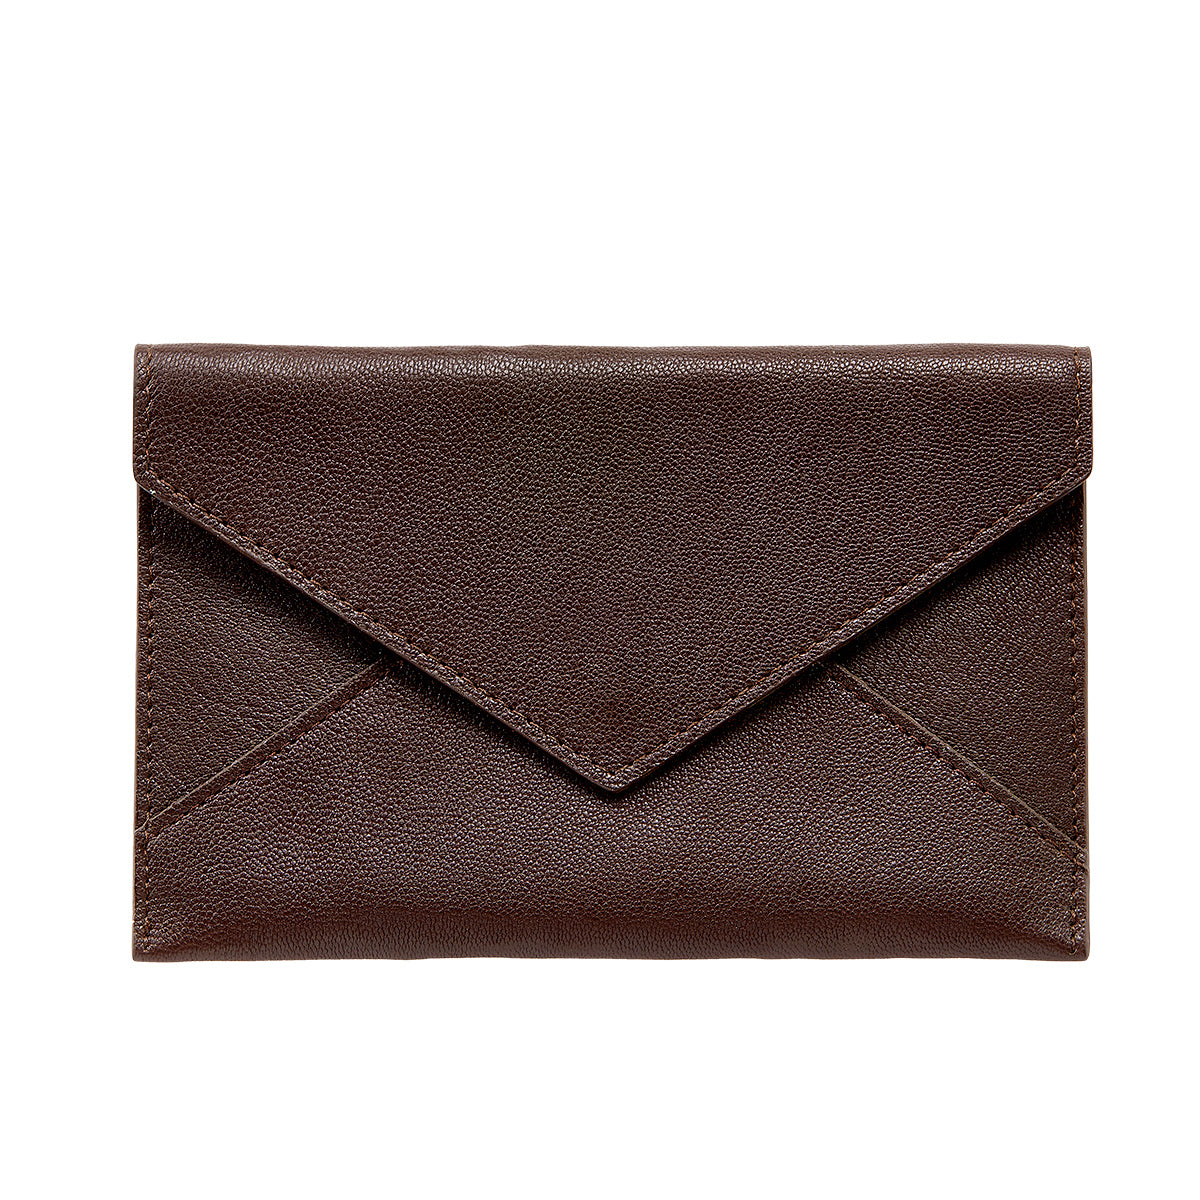 Graphic Image Medium Envelope Brown Goatskin Leather